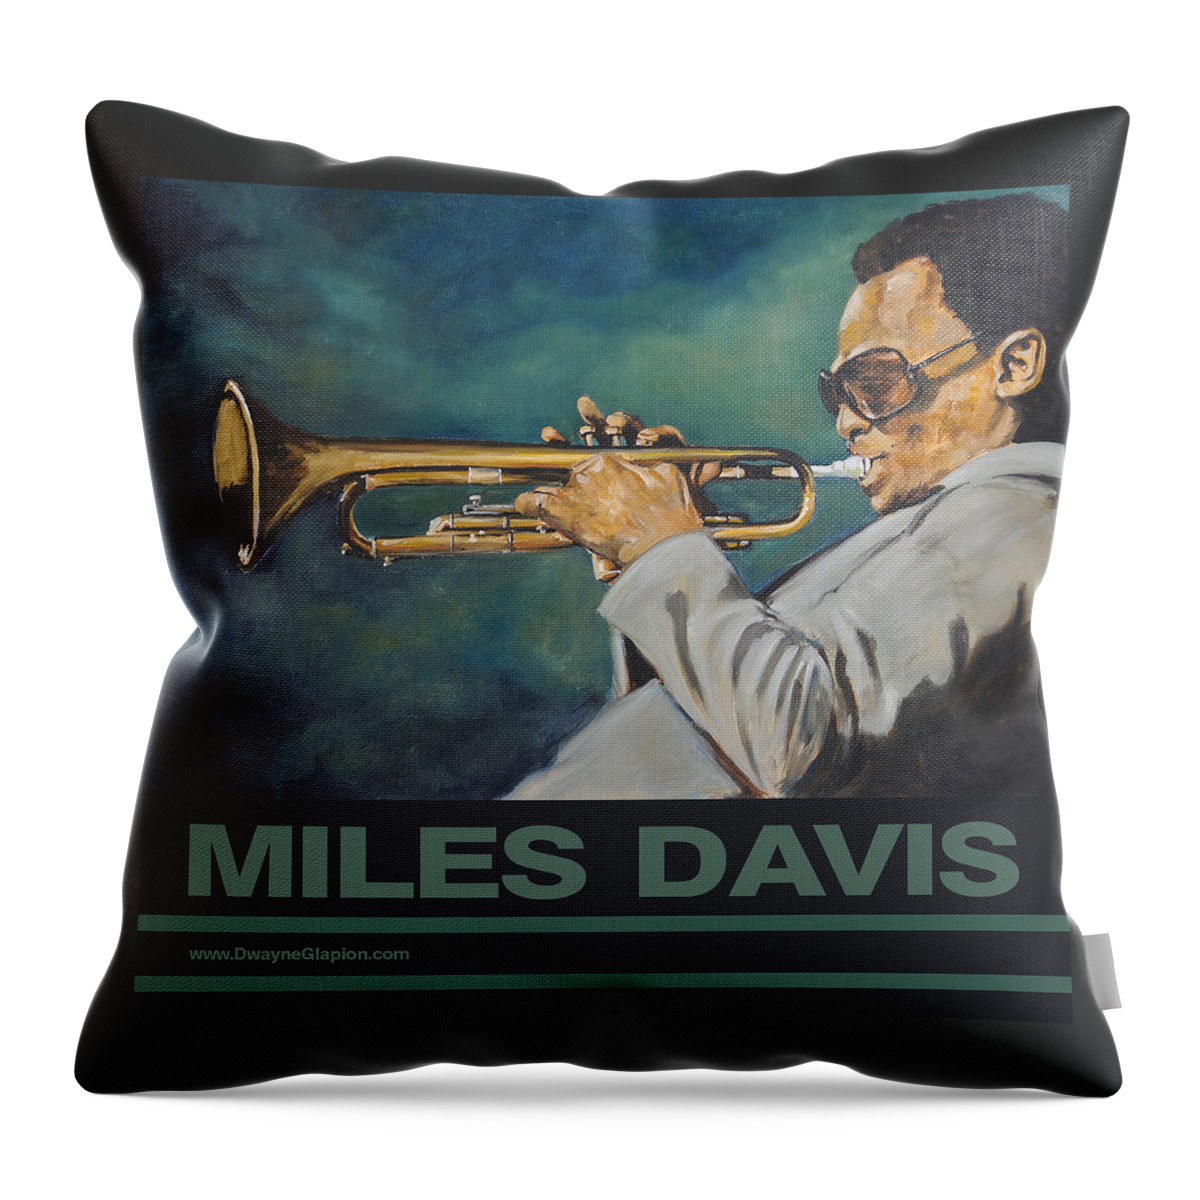 Miles Davis Throw Pillow featuring the painting Miles Davis - Solo by Dwayne Glapion